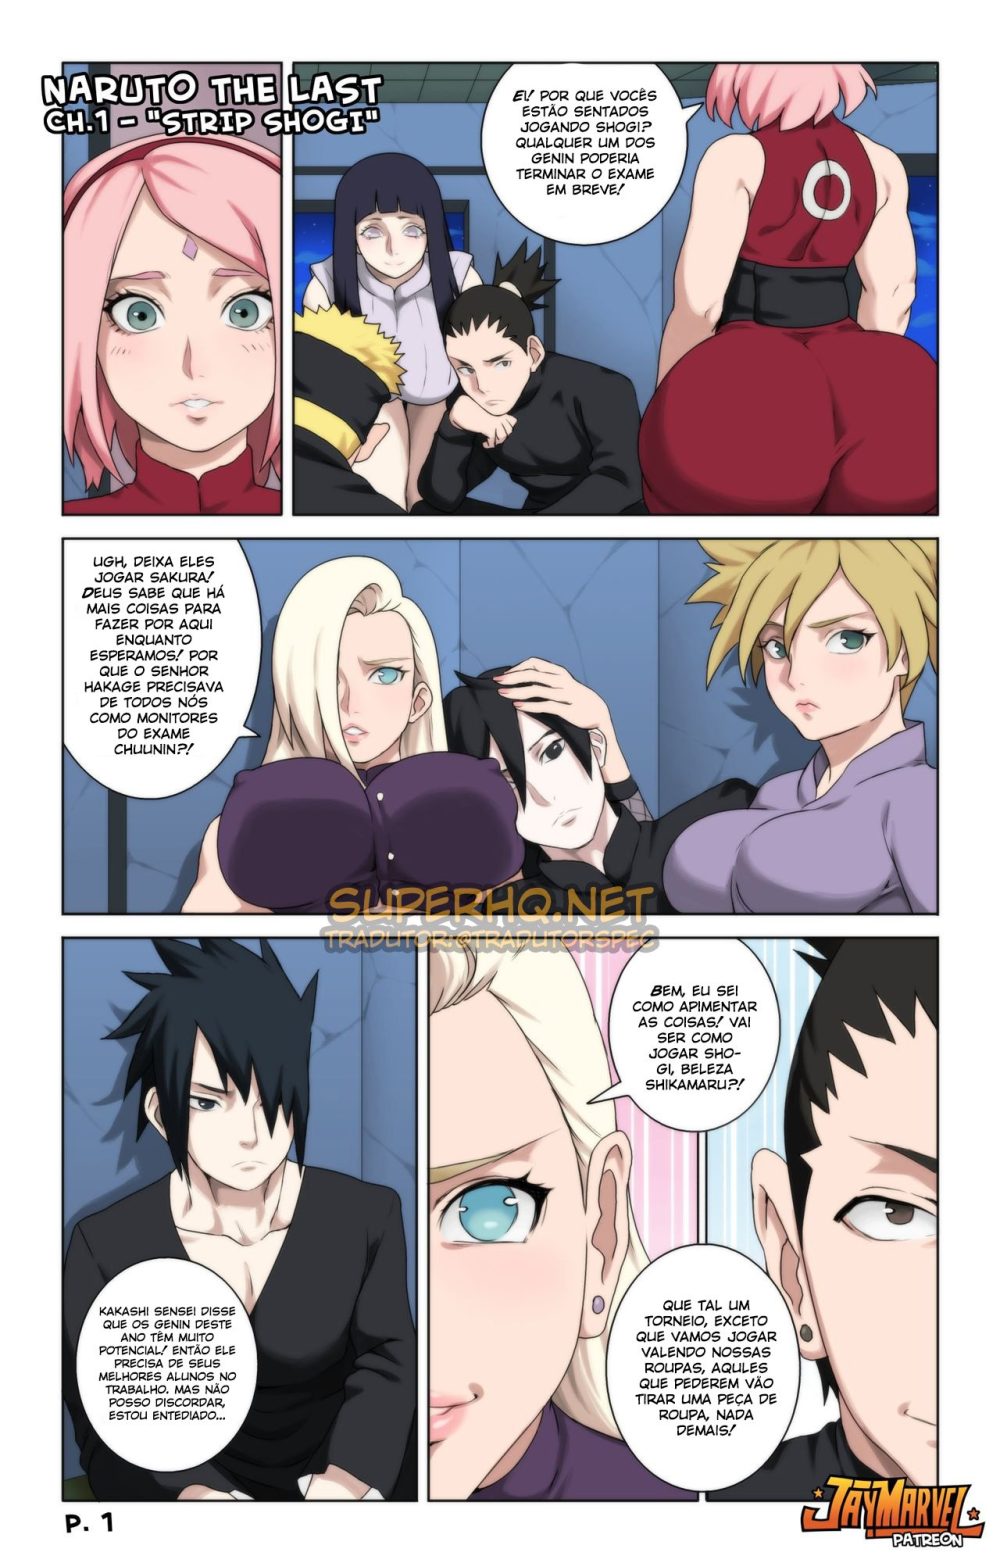 Naruto Porno com Sakura vadia levando pica